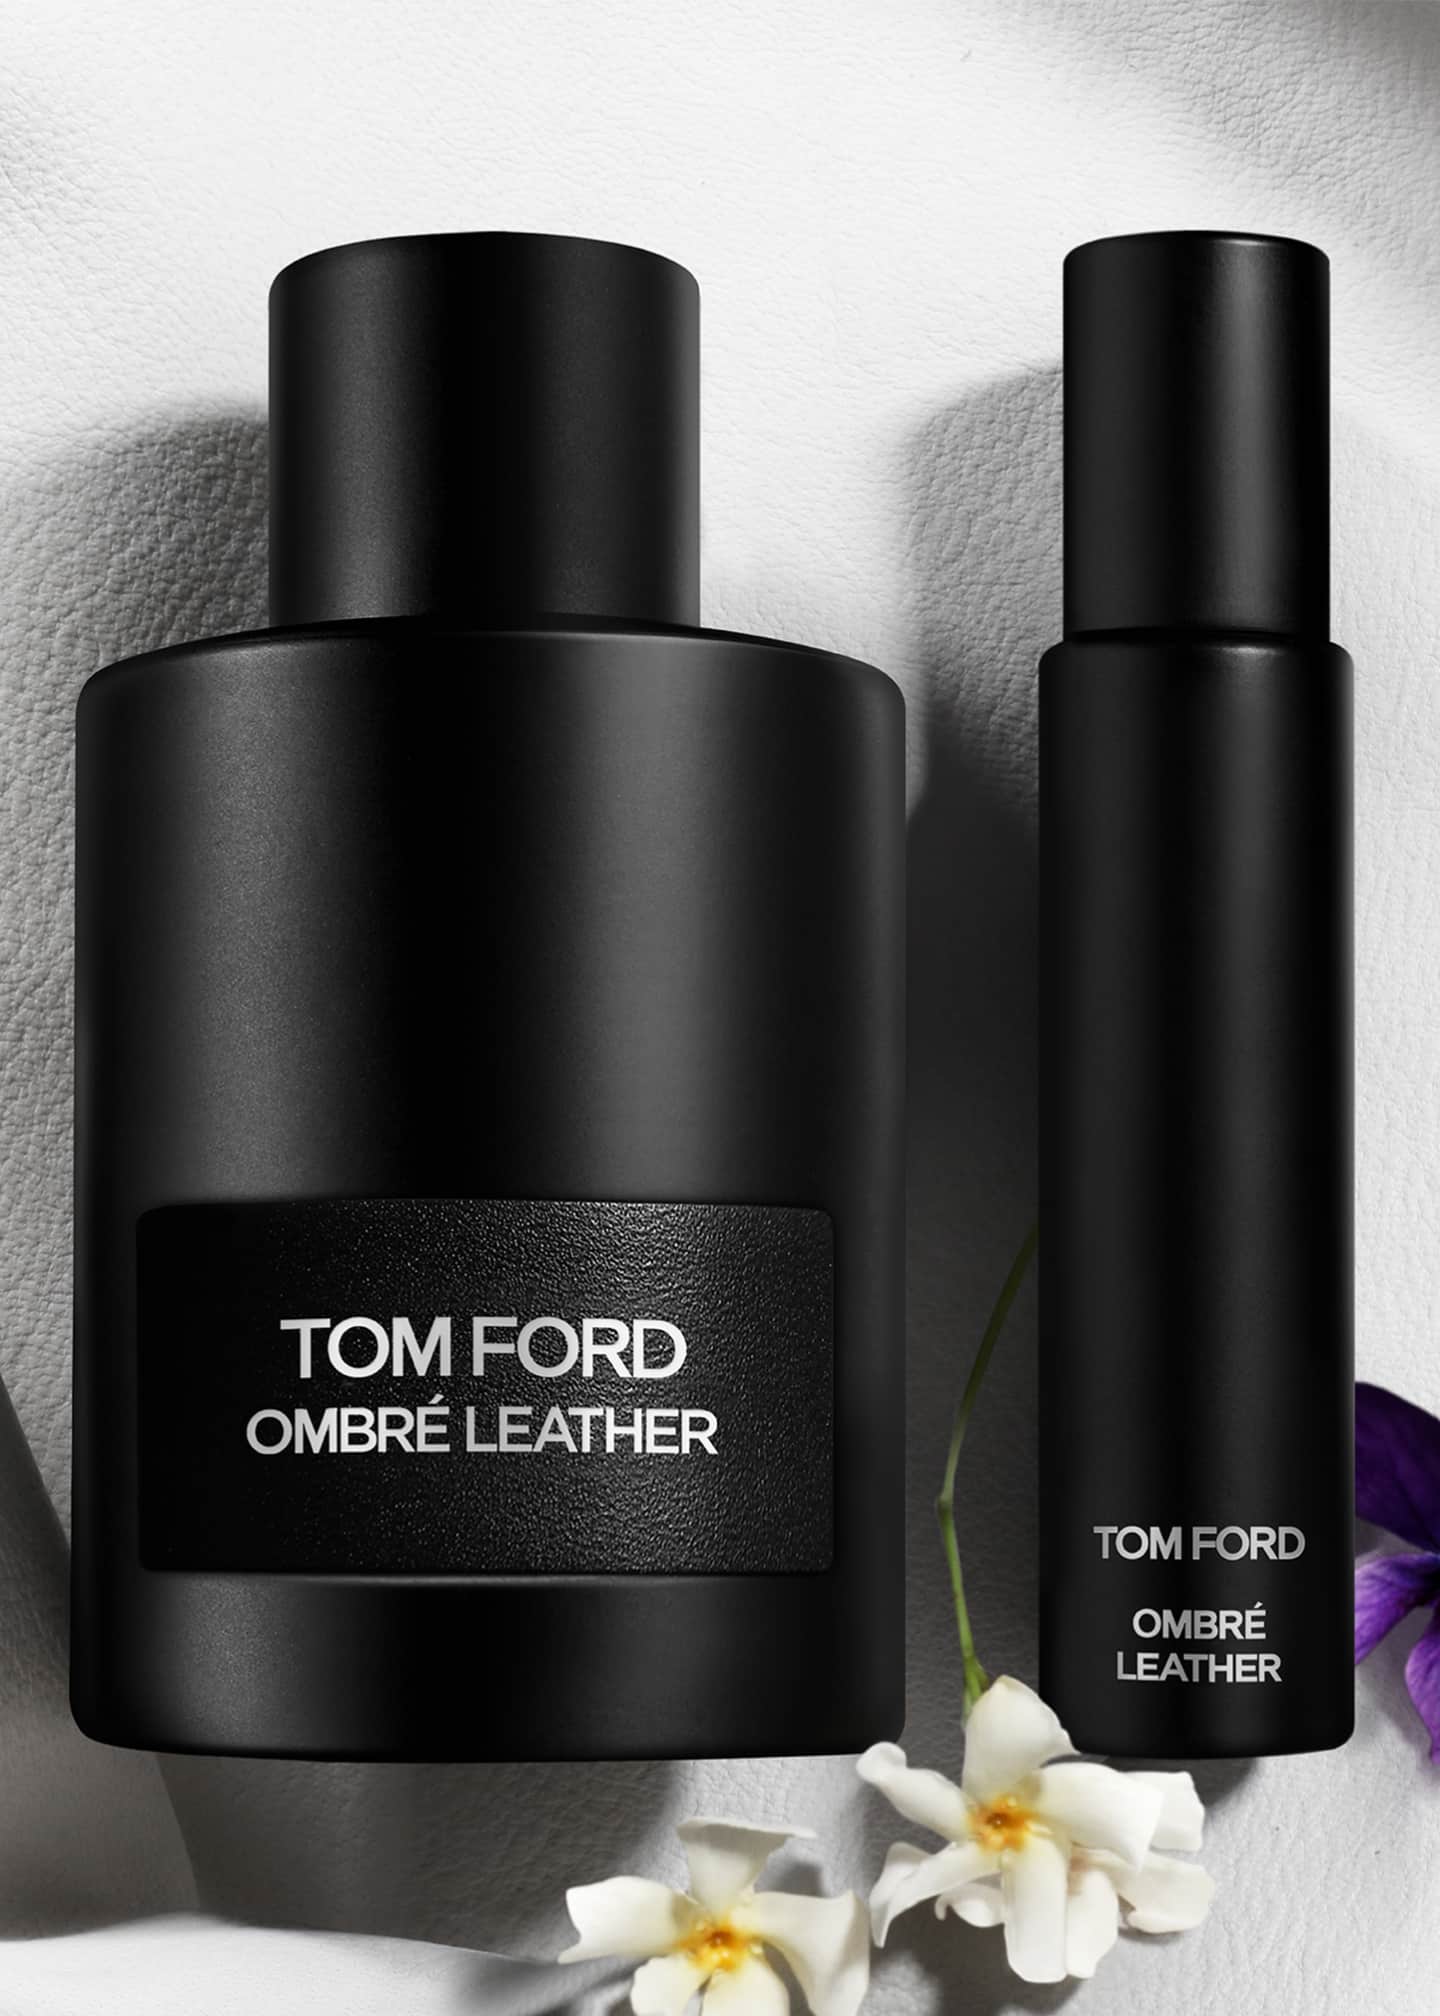 TOM FORD Ombré Leather Eau de Parfum Fragrance, 3.4 oz - Bergdorf Goodman